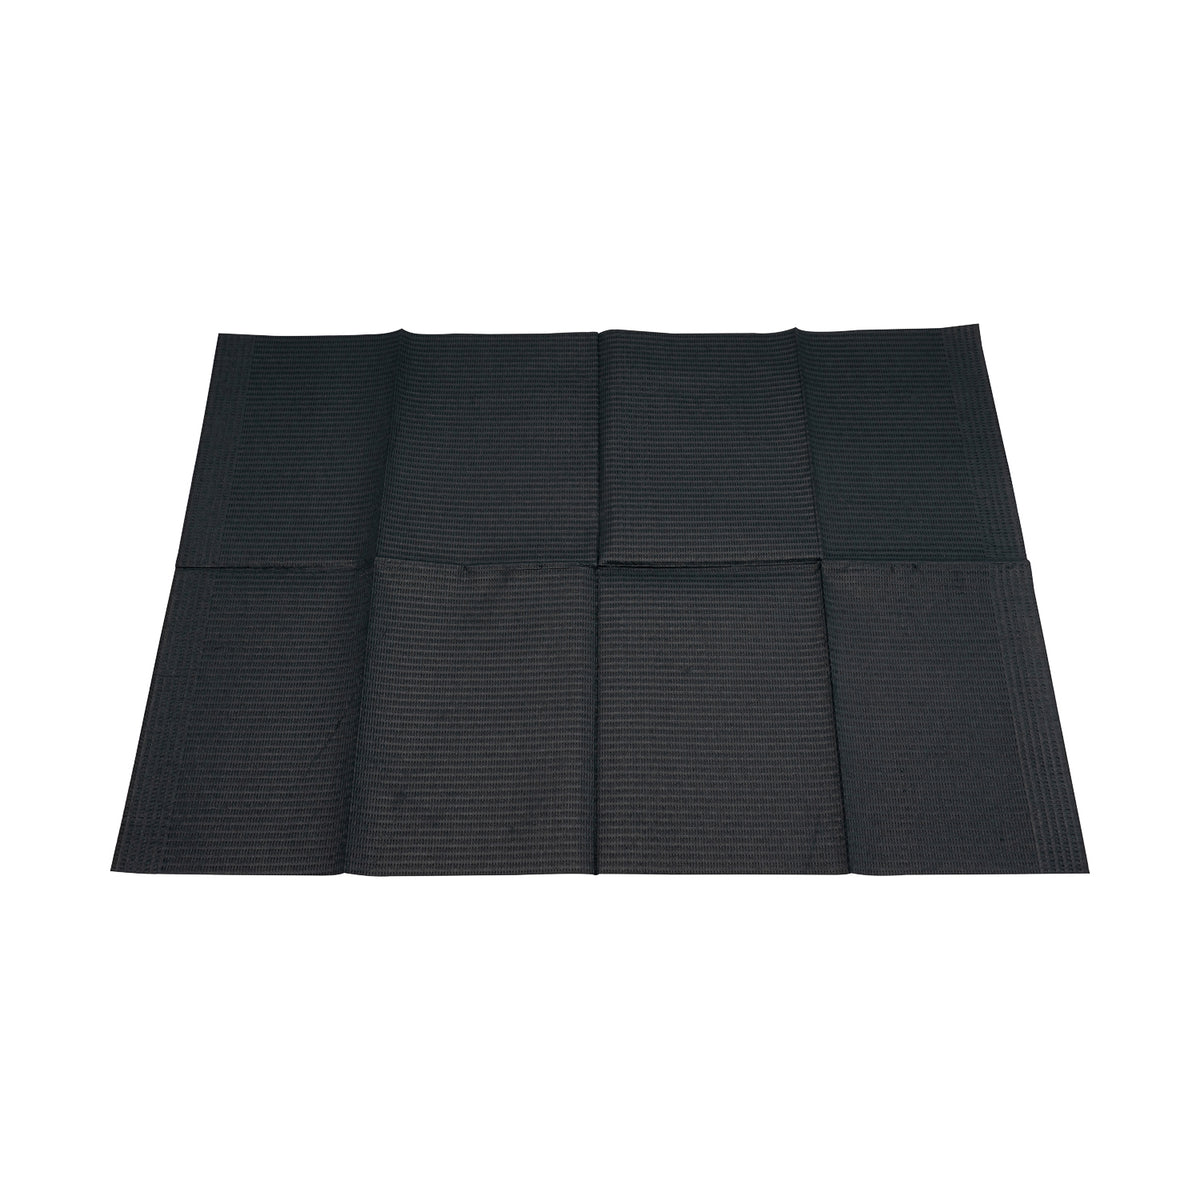 Jet Black Supply - 4-Ply Premium Lap Cloths